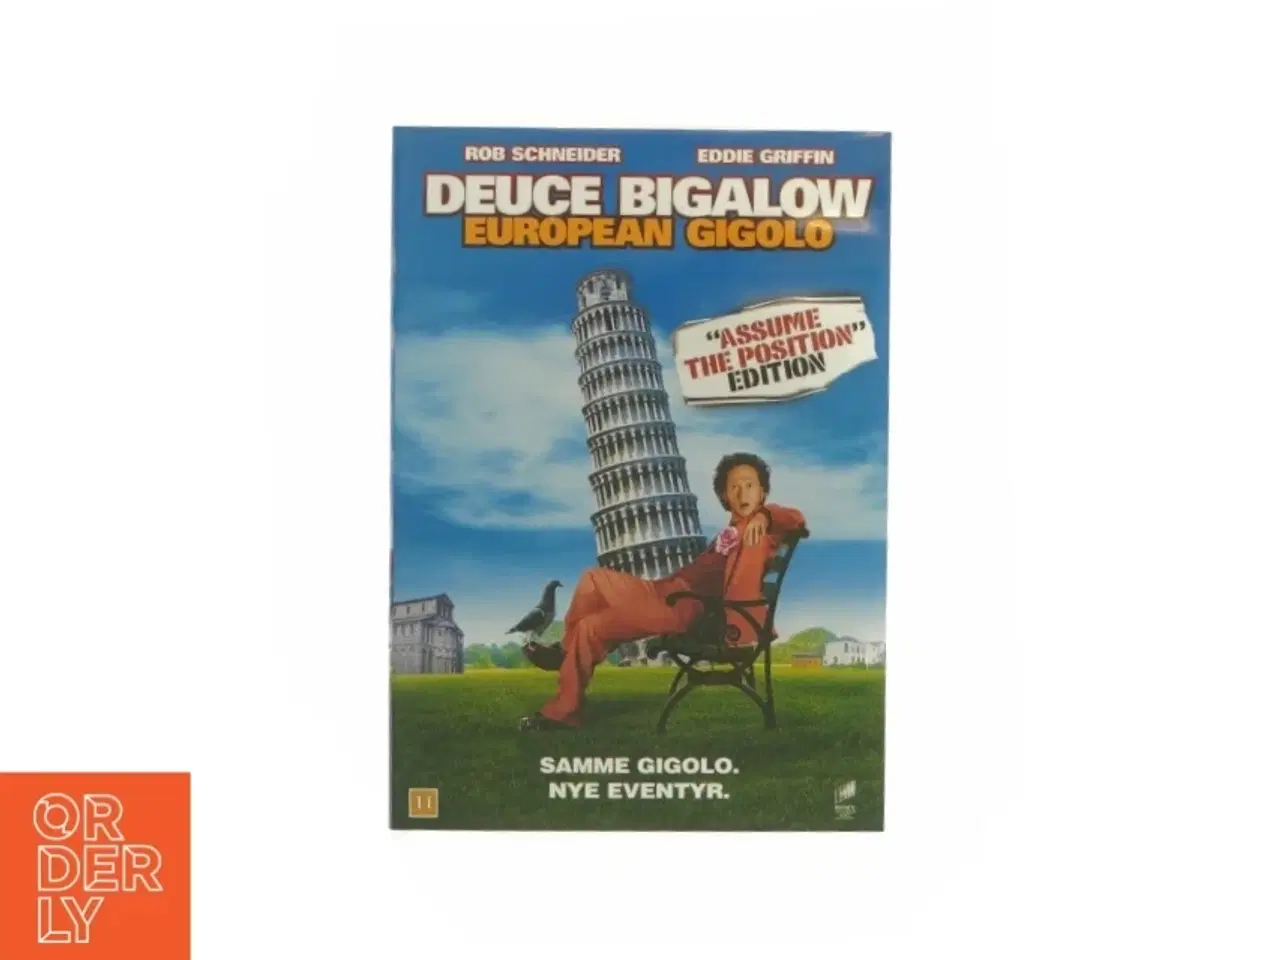 Billede 1 - Deuce Bigalow European gigolo (dvd)